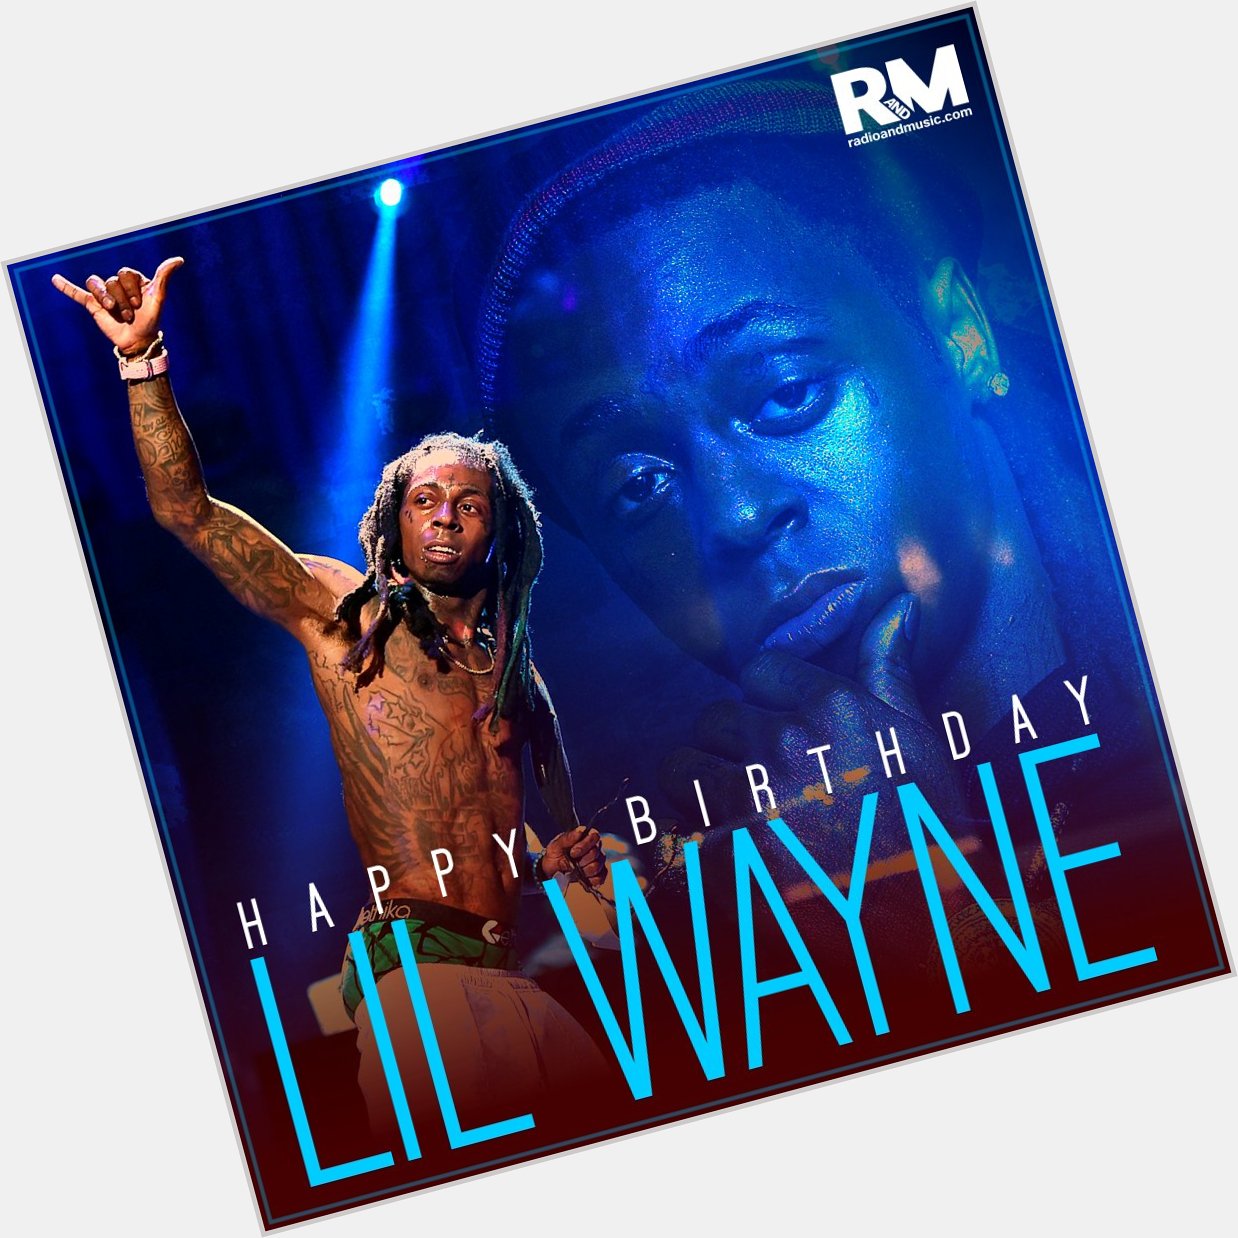 Happy Birthday Lil Wayne!!   